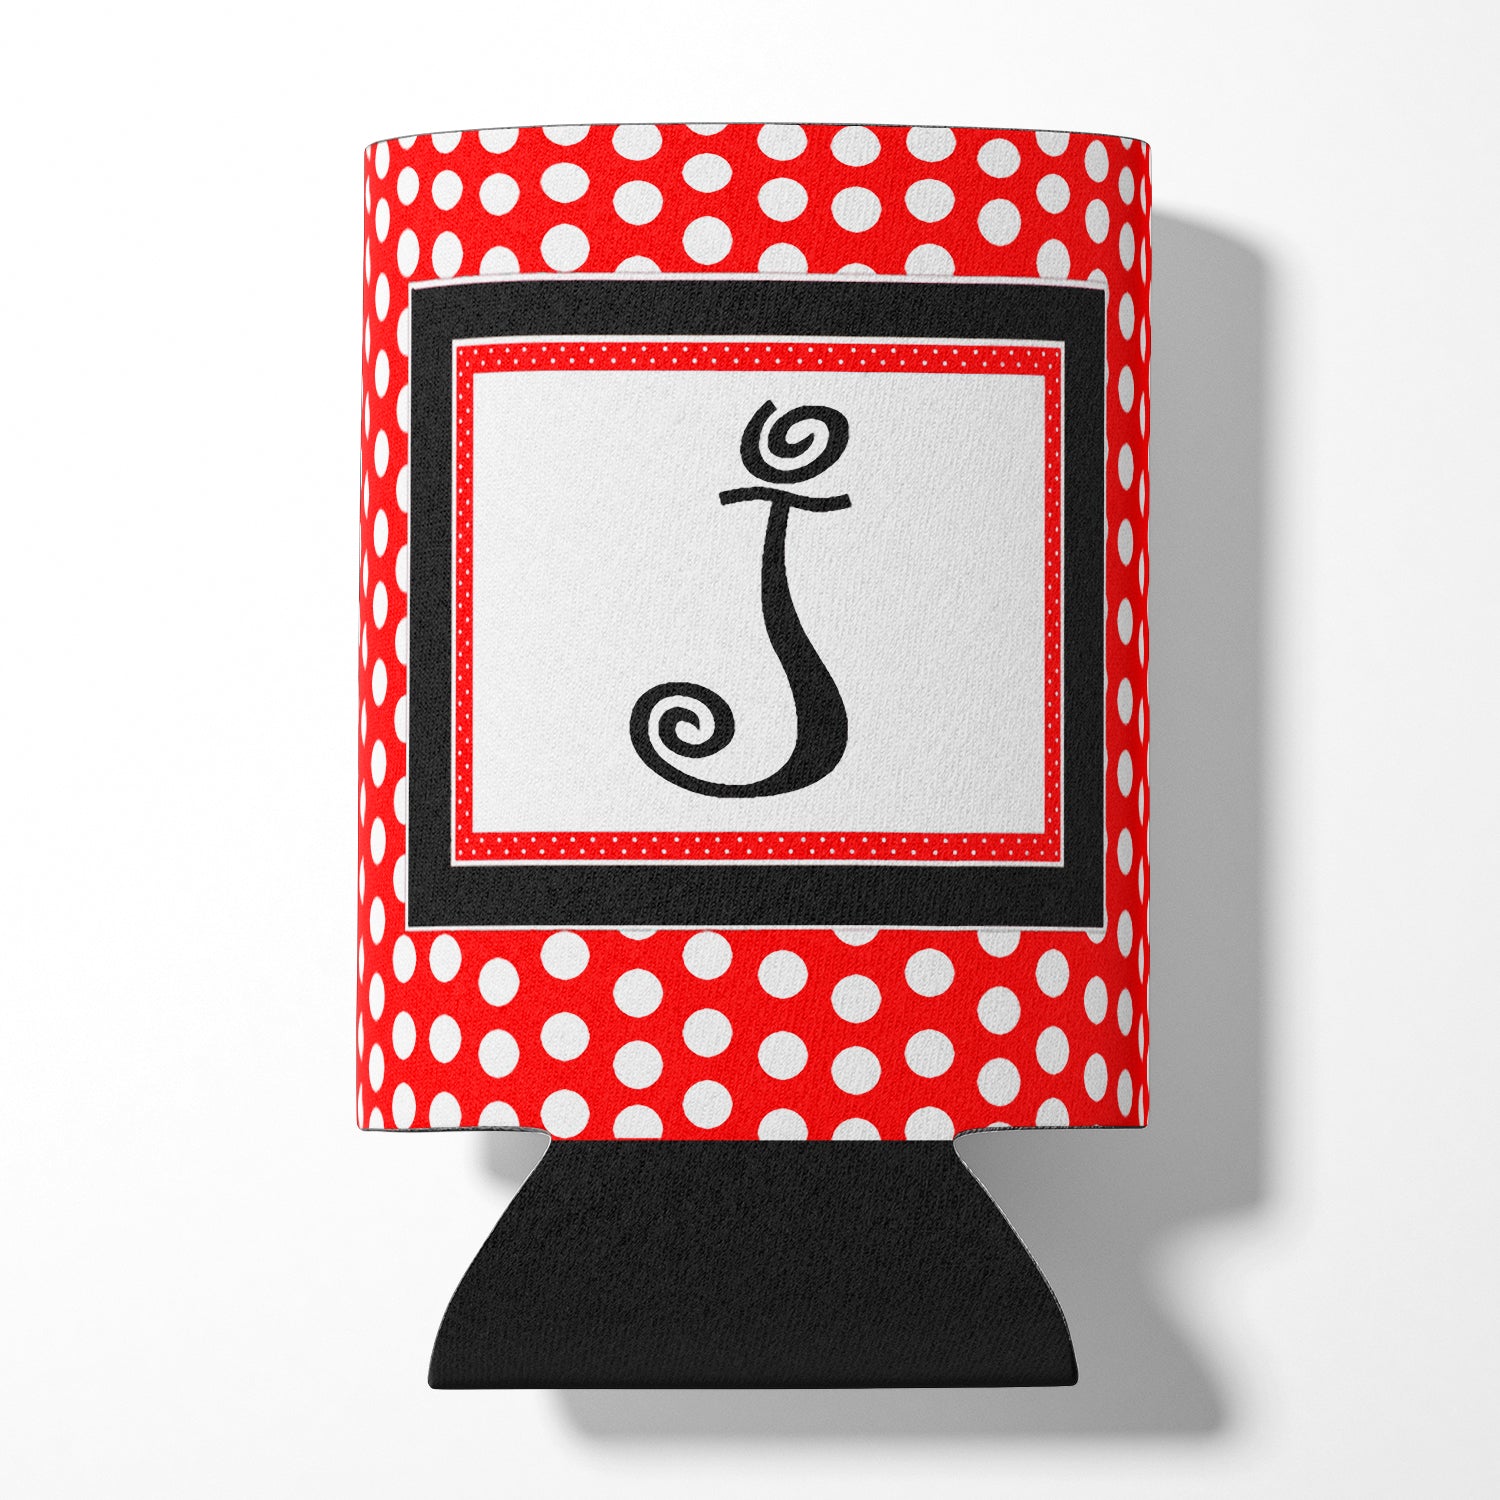 Letter J Initial Monogram - Red Black Polka Dots Can or Bottle Beverage Insulator Hugger.